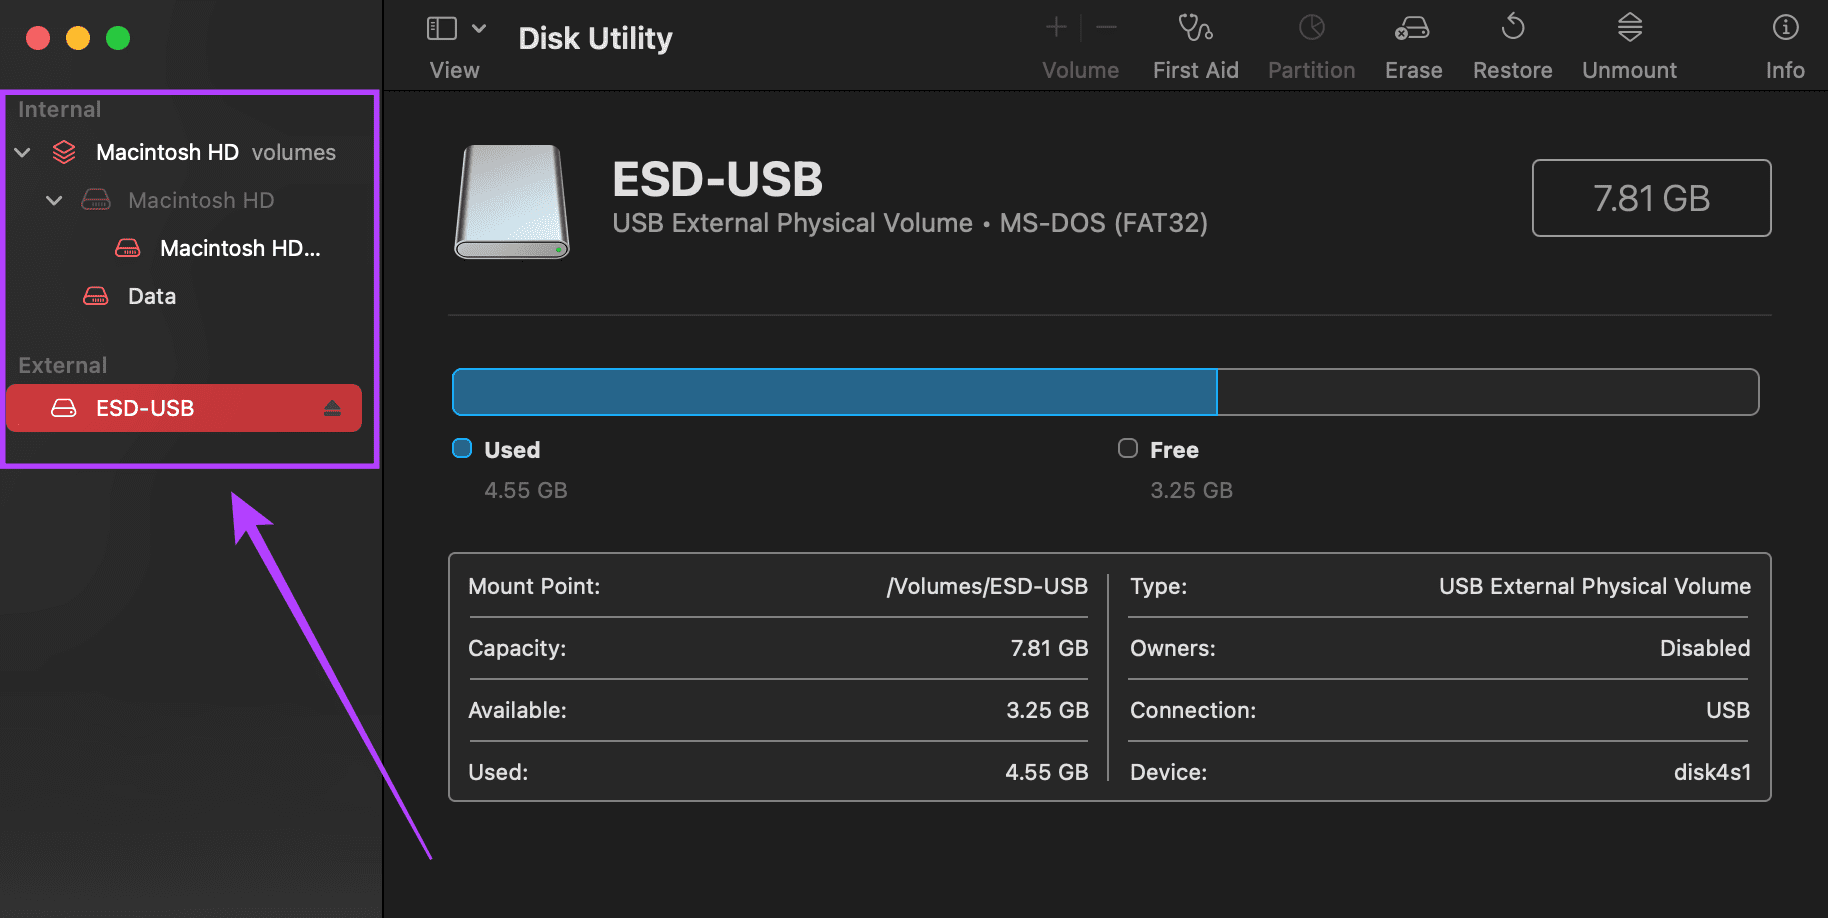 Disk Utility app